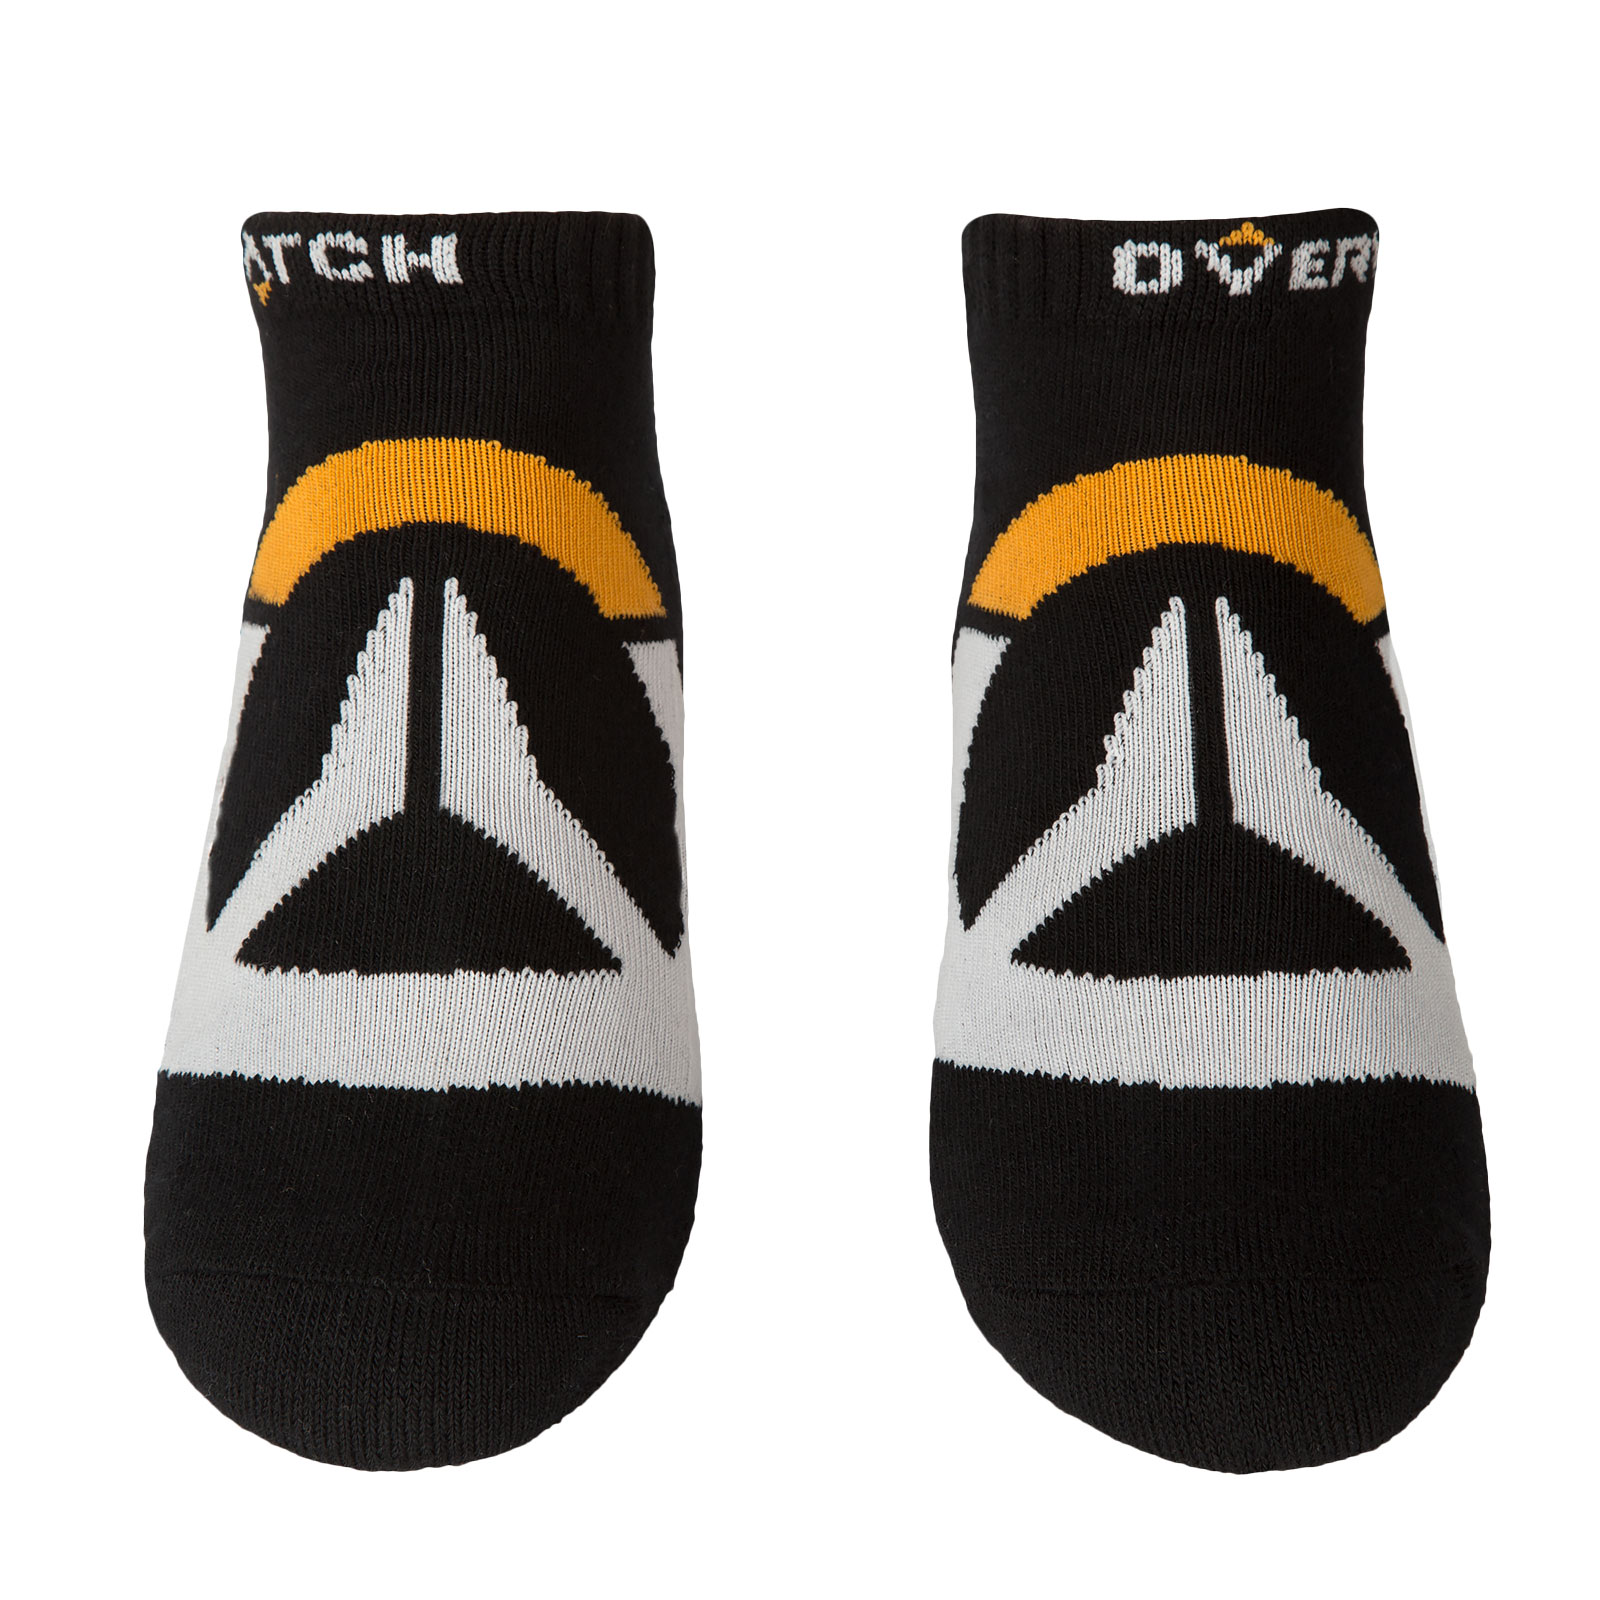 Overwatch - Logo Socks 3 set black